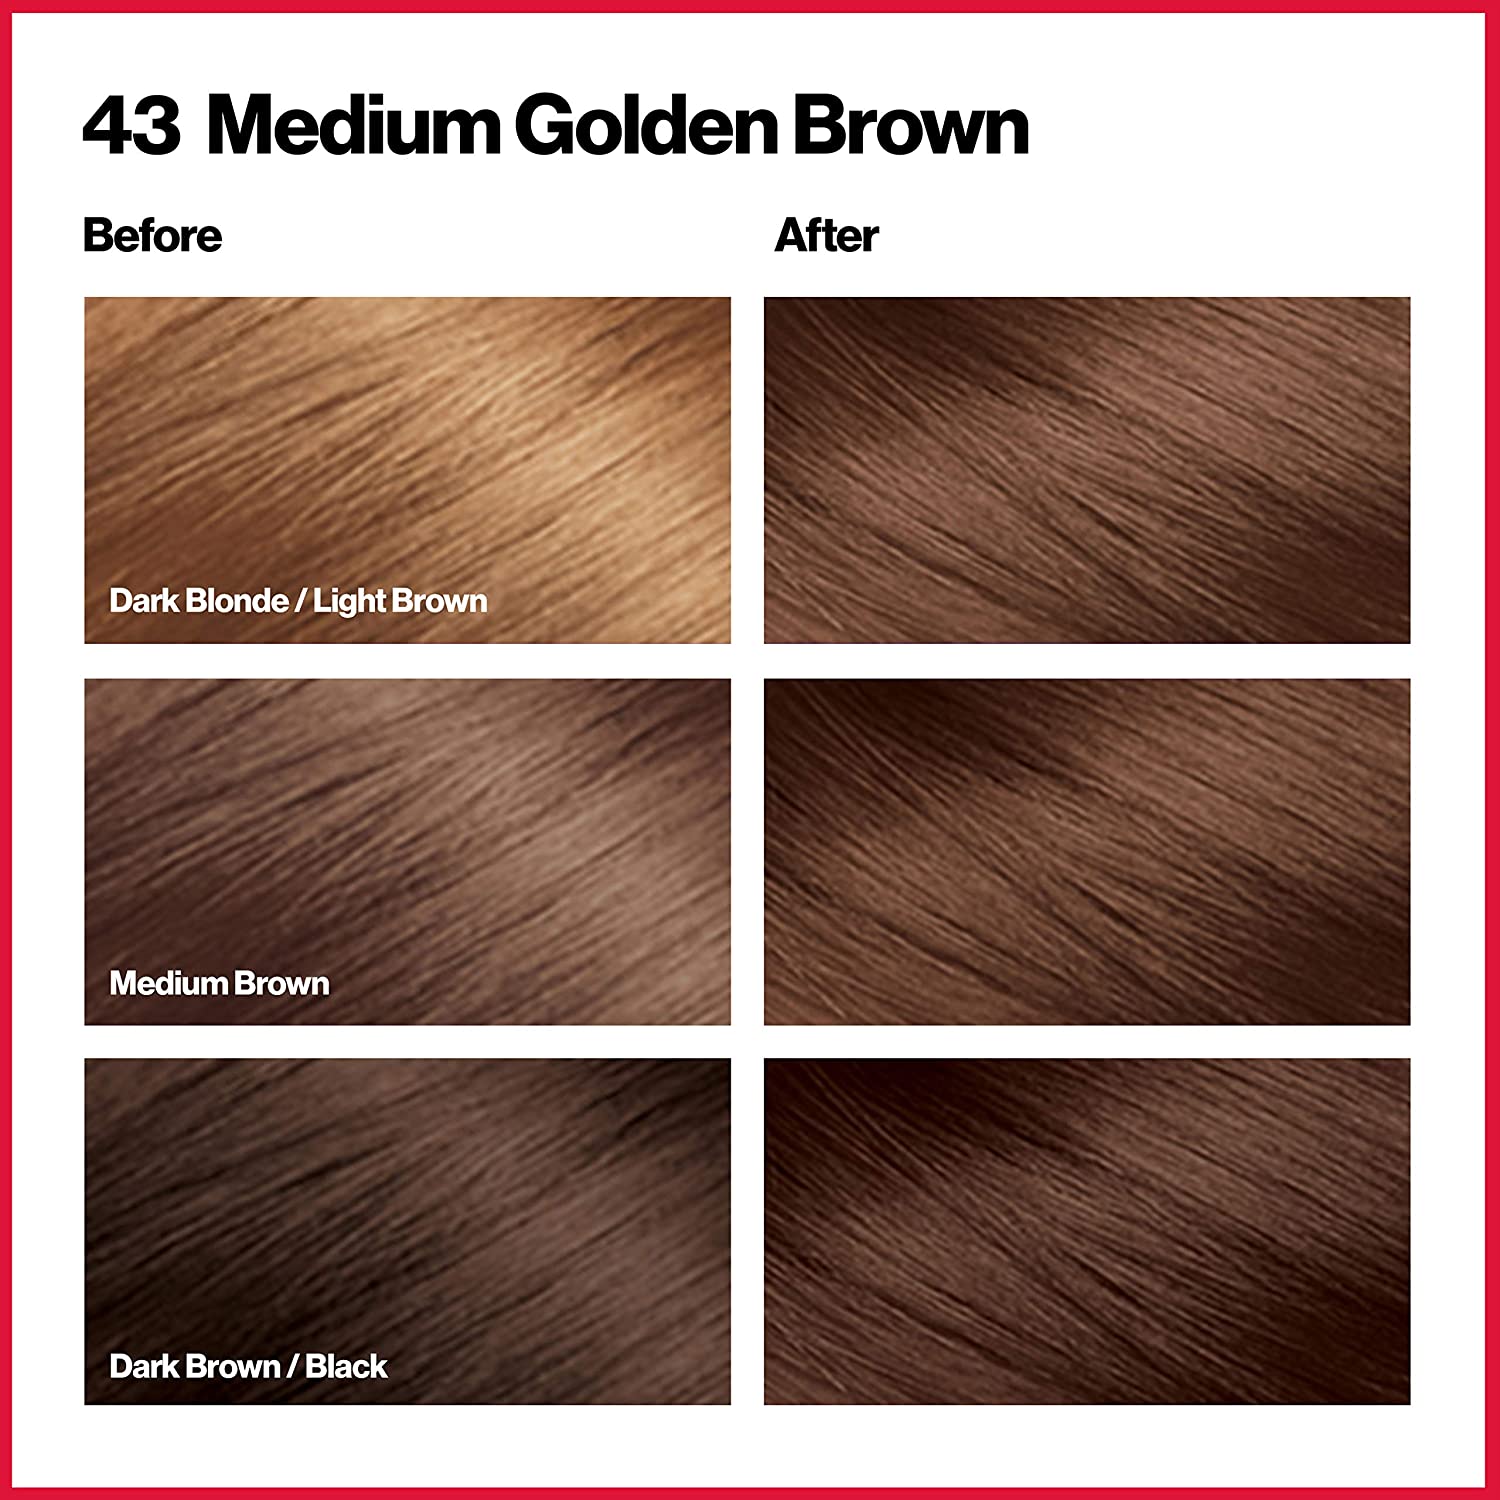 Medium Golden Brown